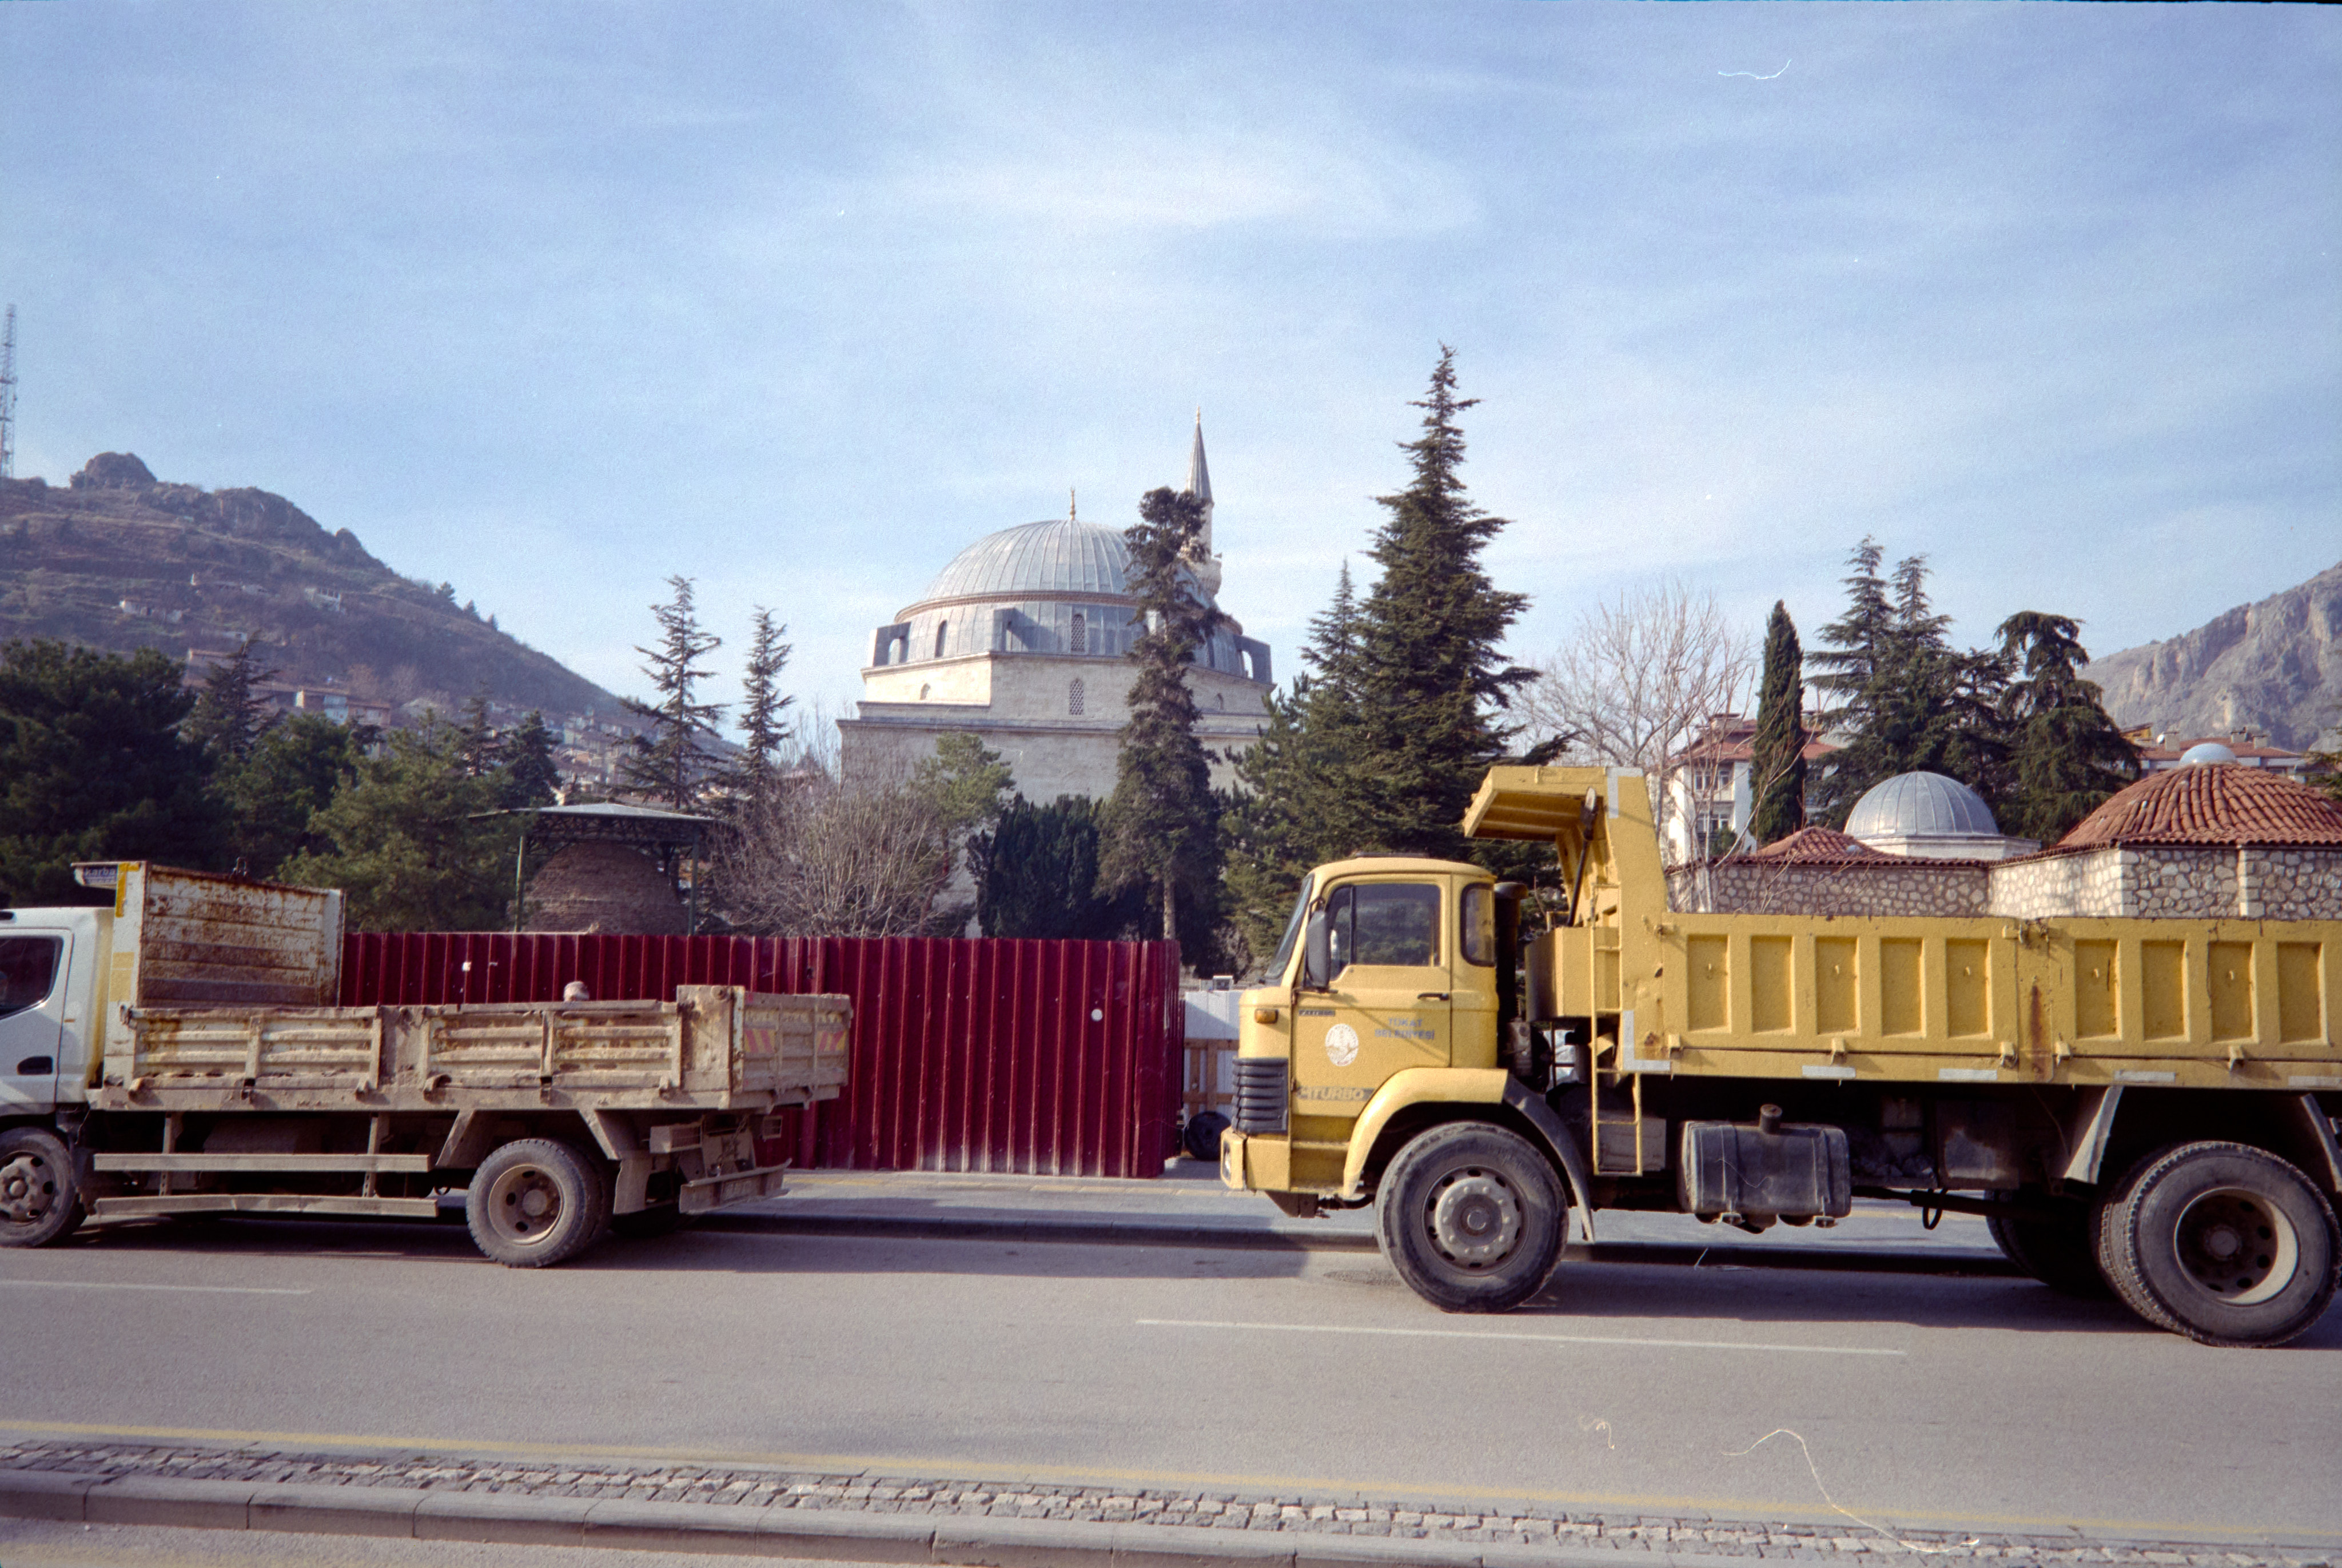 İnşaat [ construction] at its finest, near Tokat's Ulu Cami